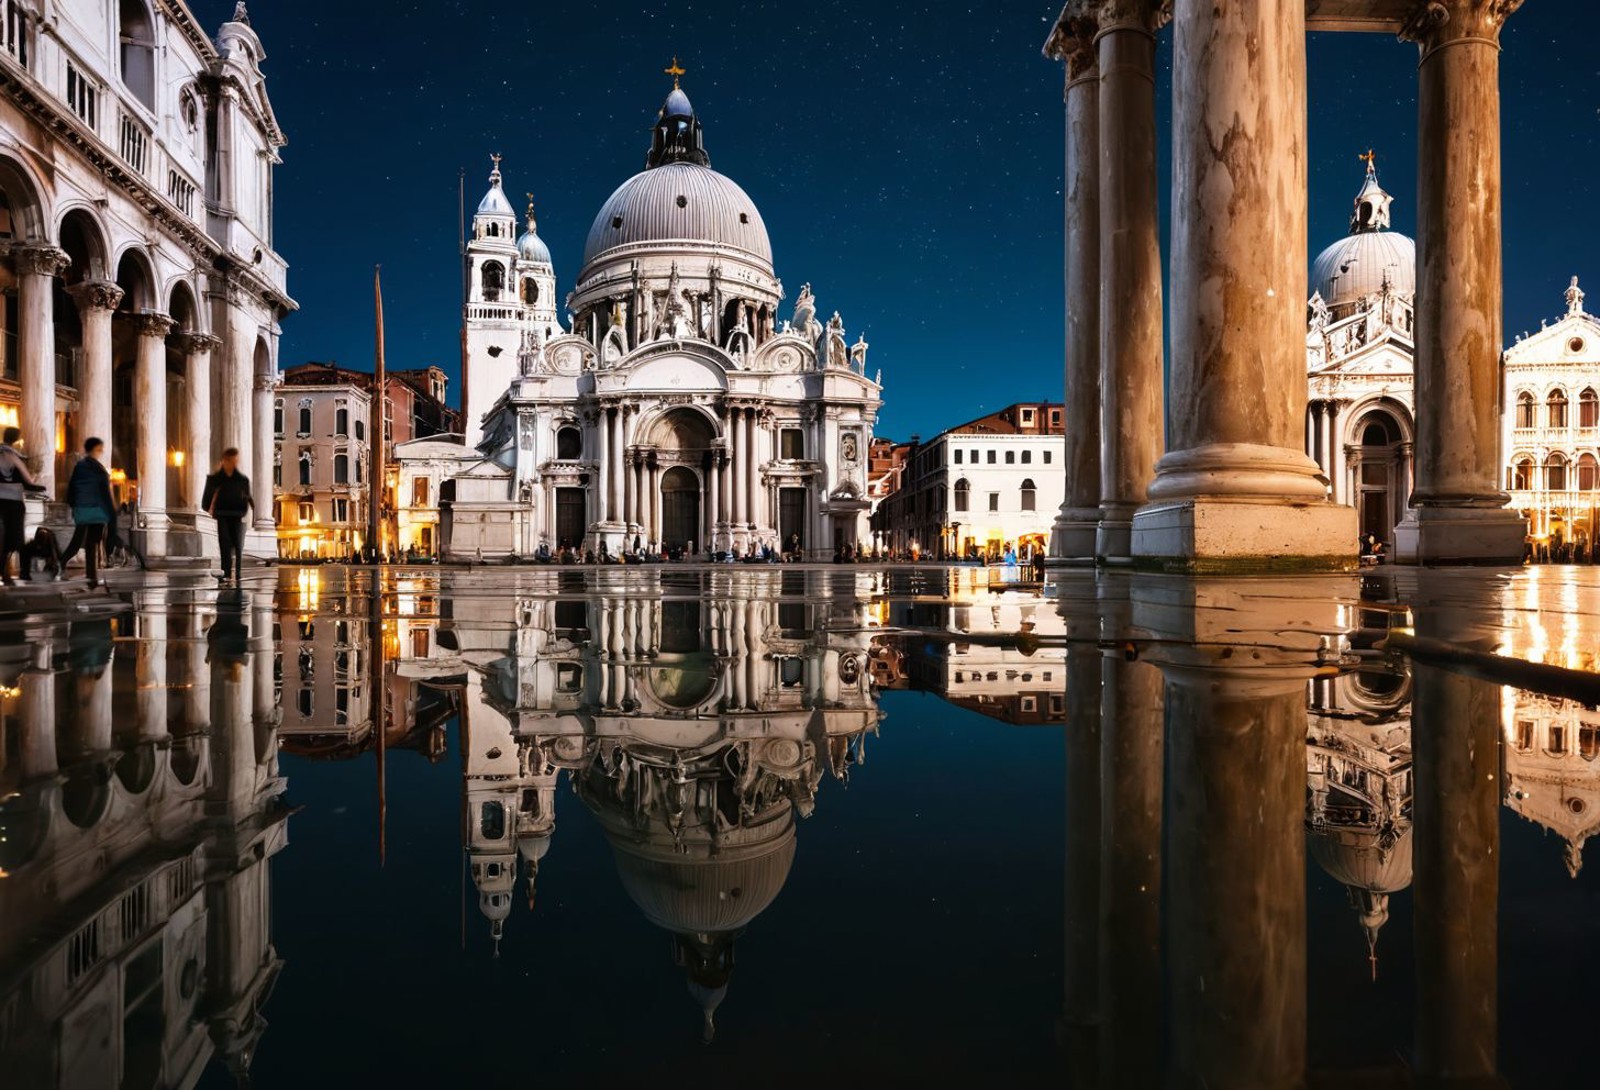 The Basilica di Santa Maria della Salute, a renowned landmark in Venice, Italy, stands majestically against the night sky....